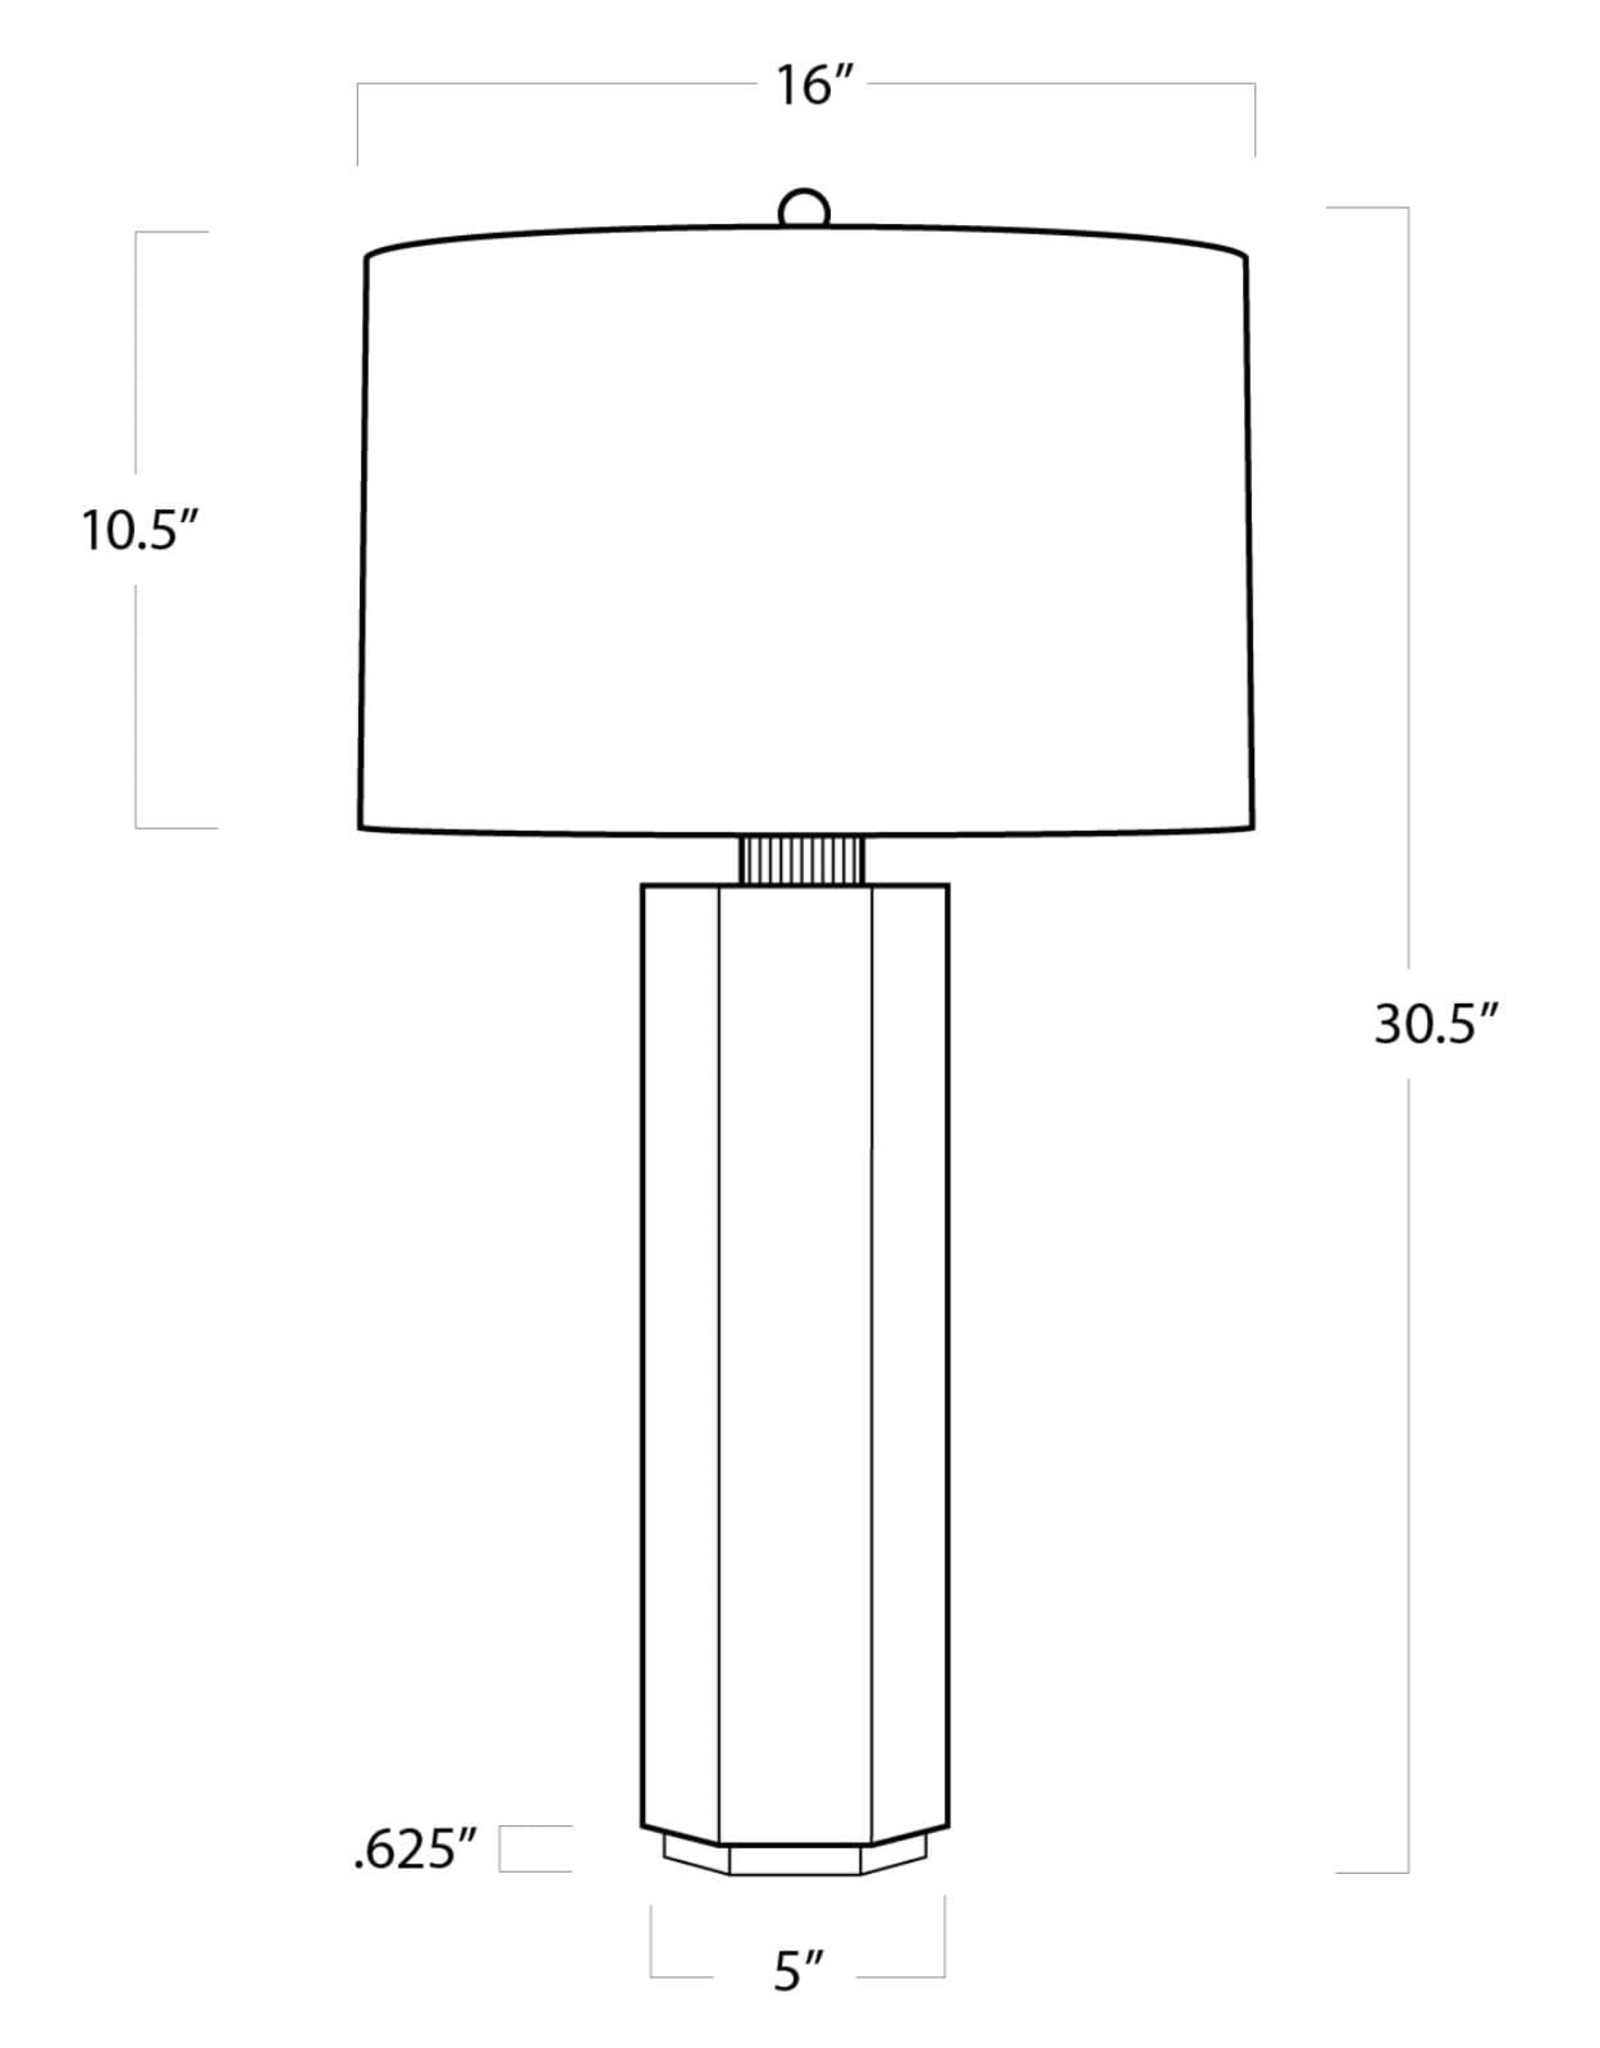 Regina Andrew Design Gear Alabaster Table Lamp